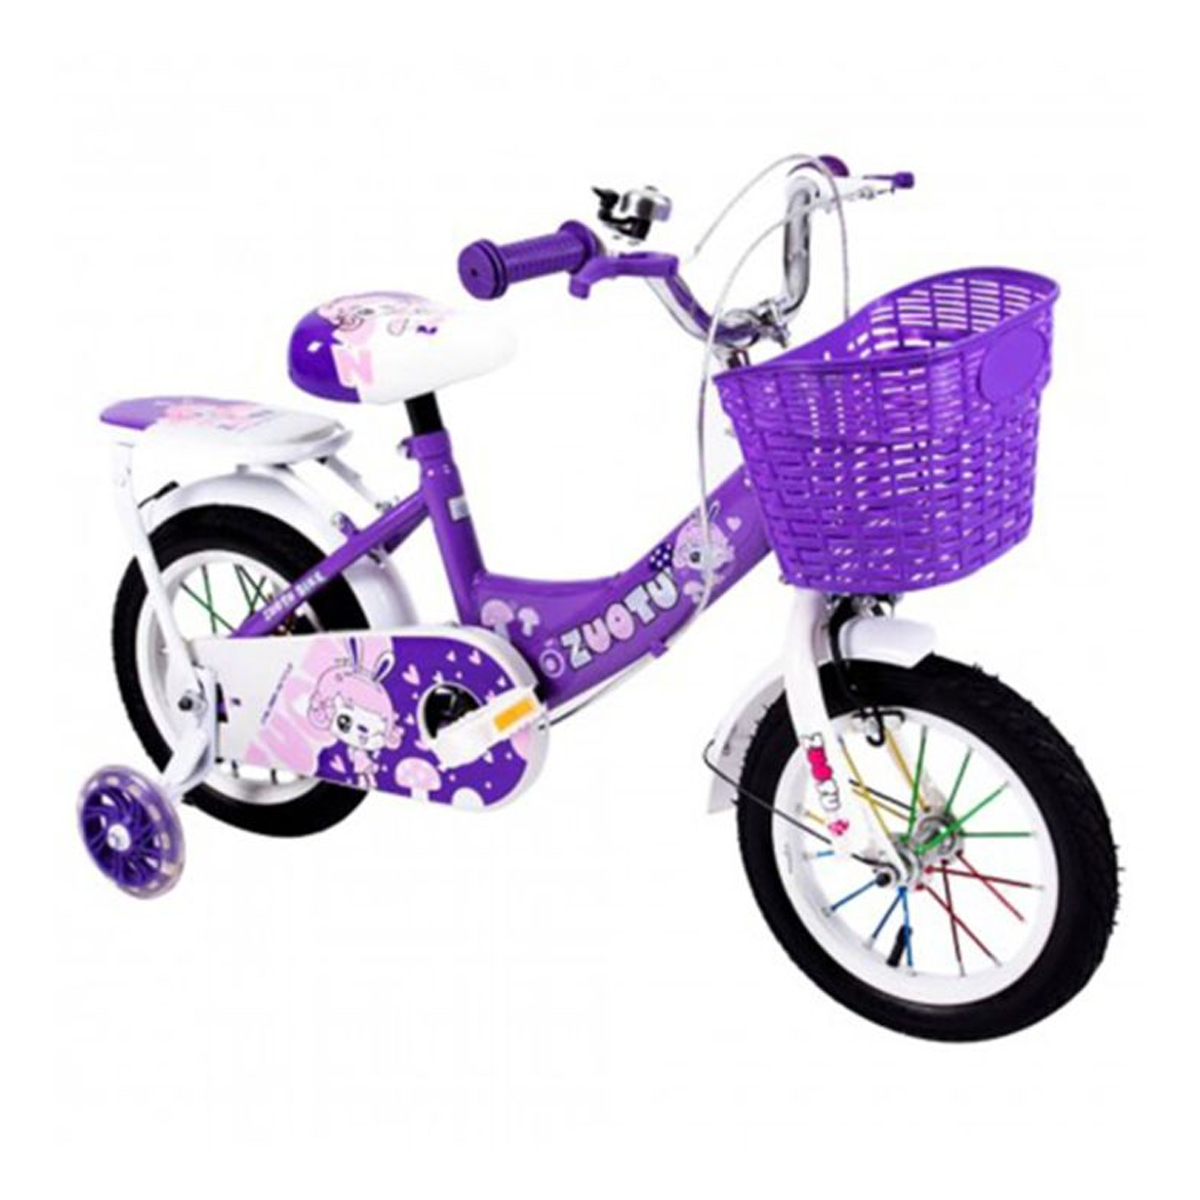 DESERT STAR Wheels Kids Bicycle 14inch